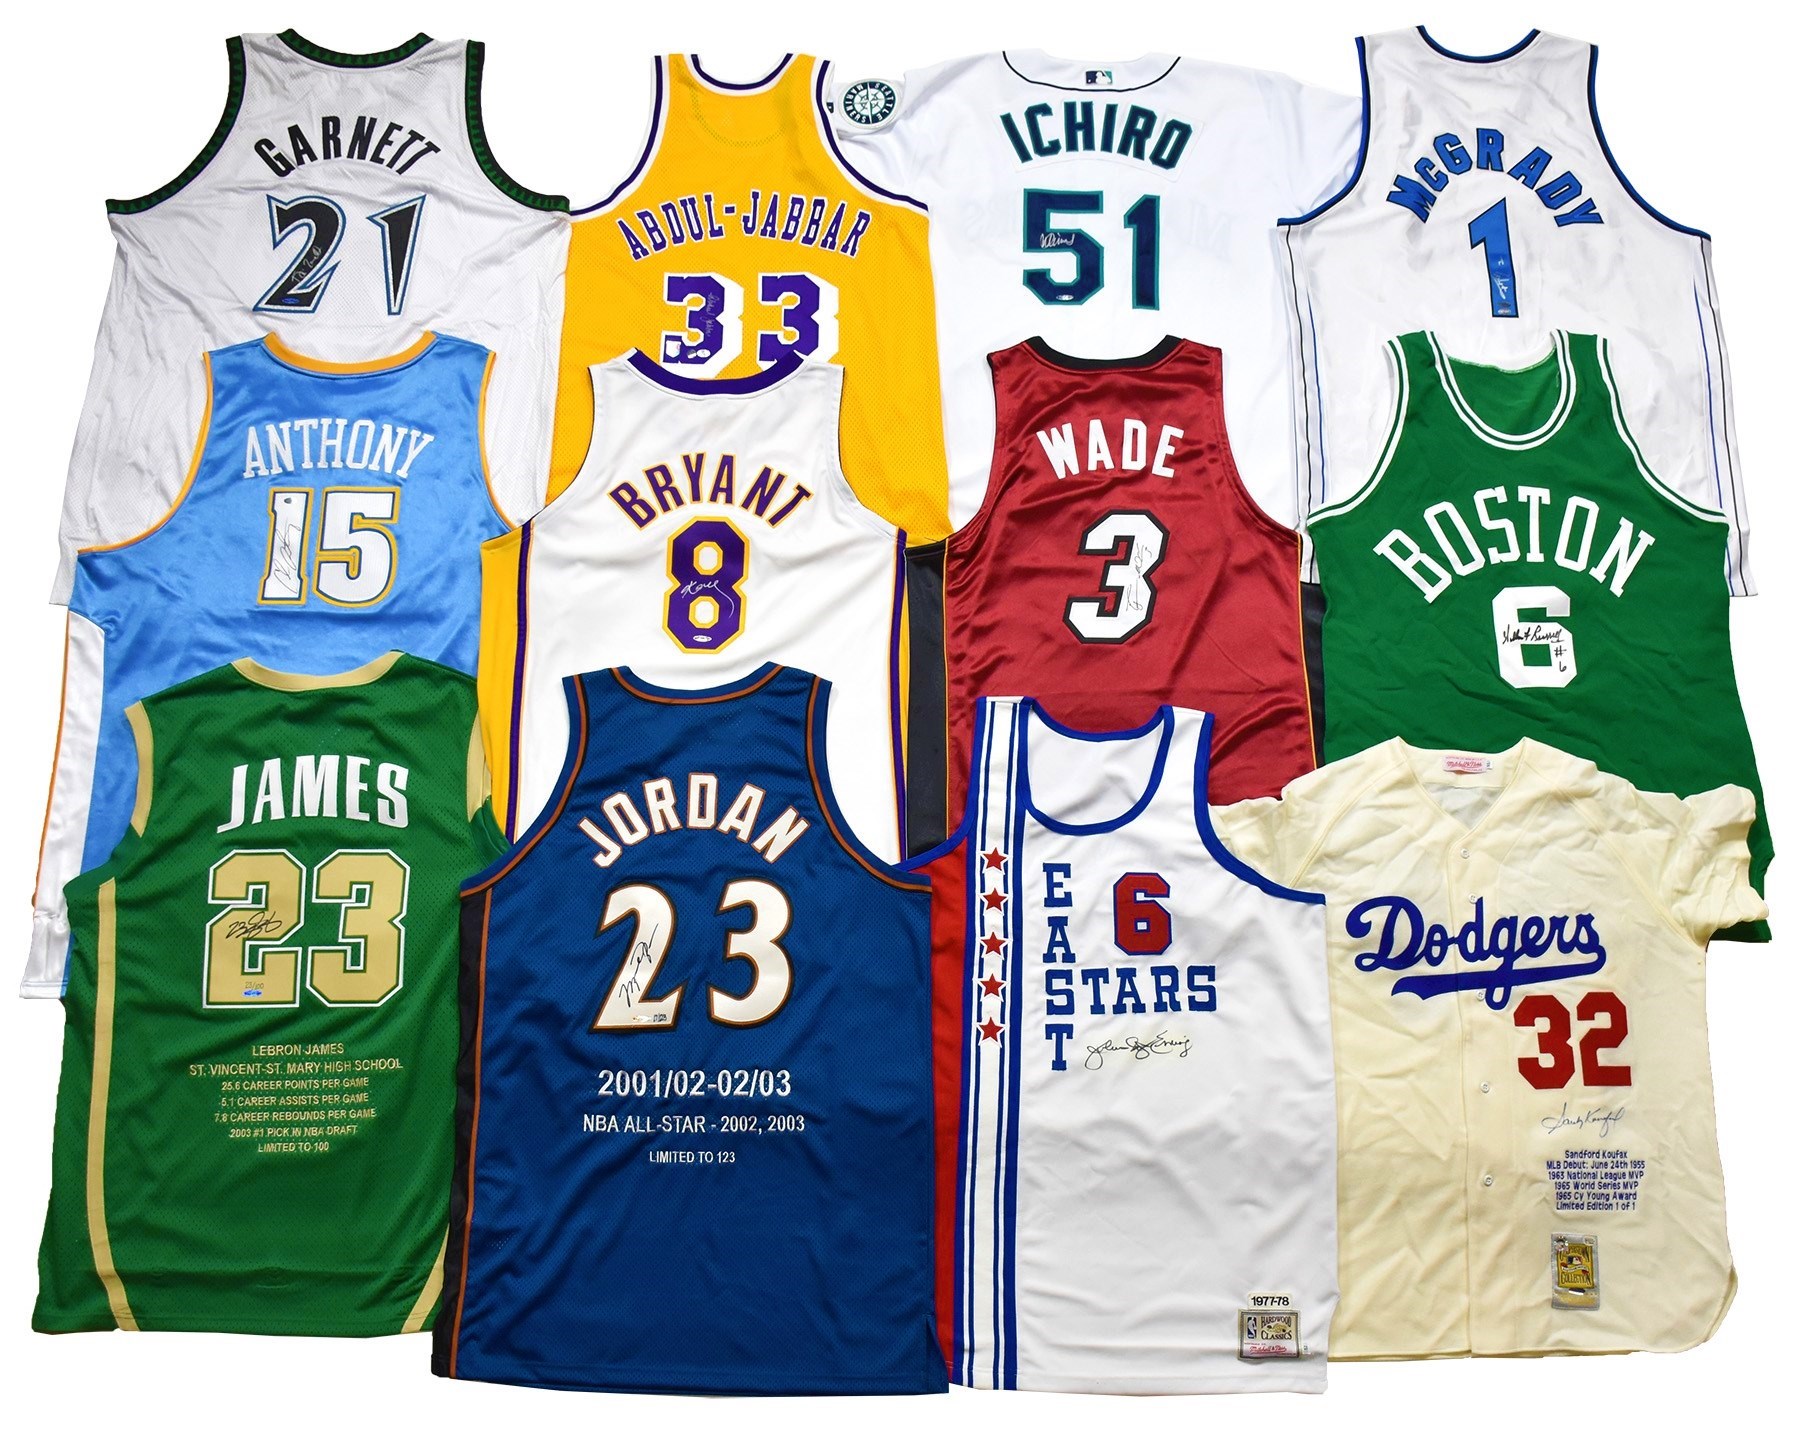 - Major Sport Legends Signed Jersey Collection with LeBron, Kobe & Jordan (35+)